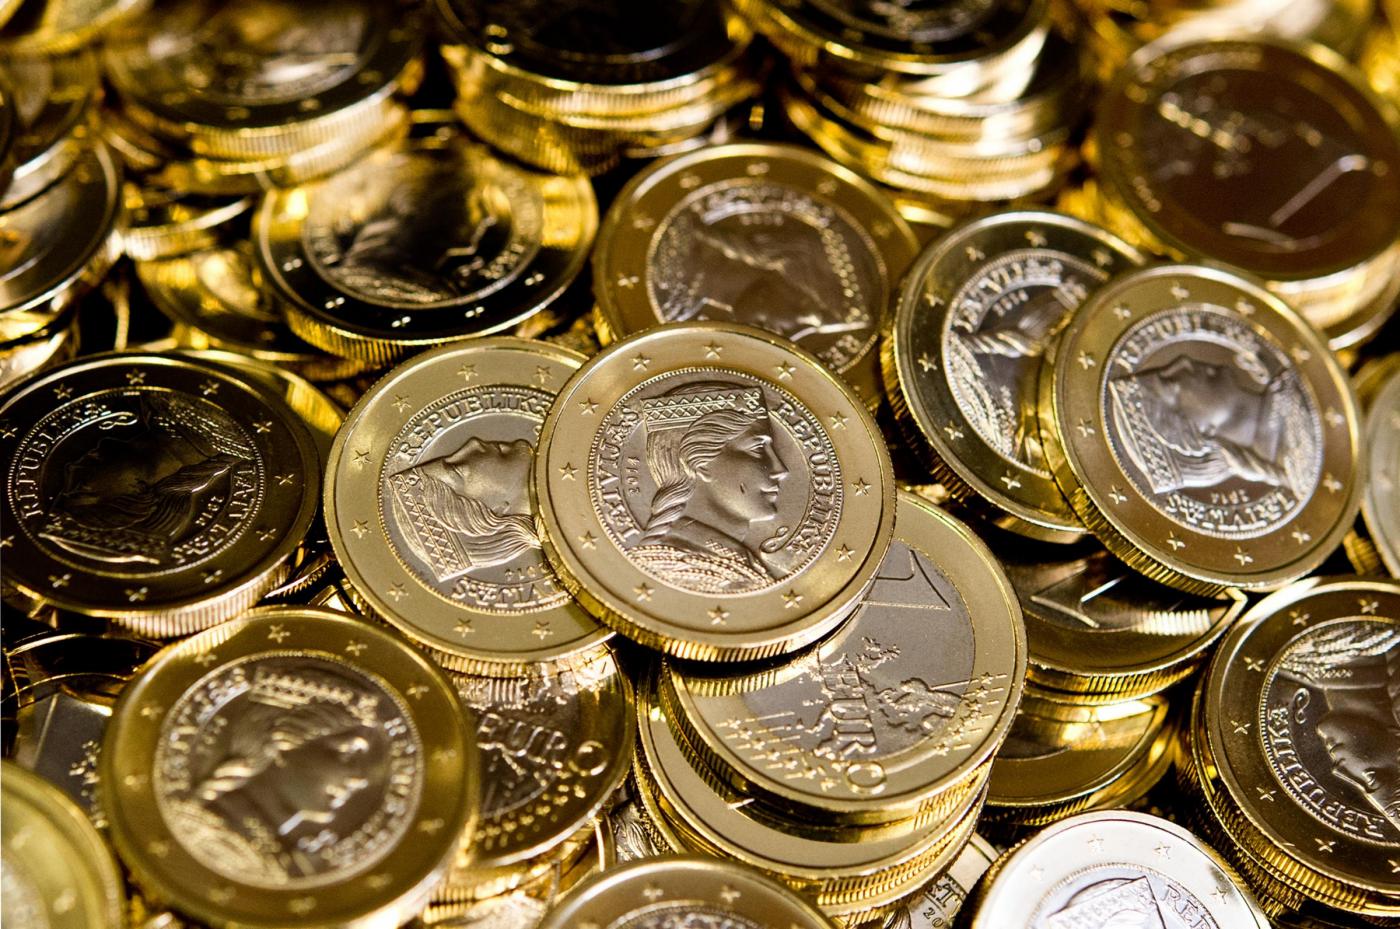 Euro falsi made in China, sequestrate 300.000 monete da 1 e 2 euro